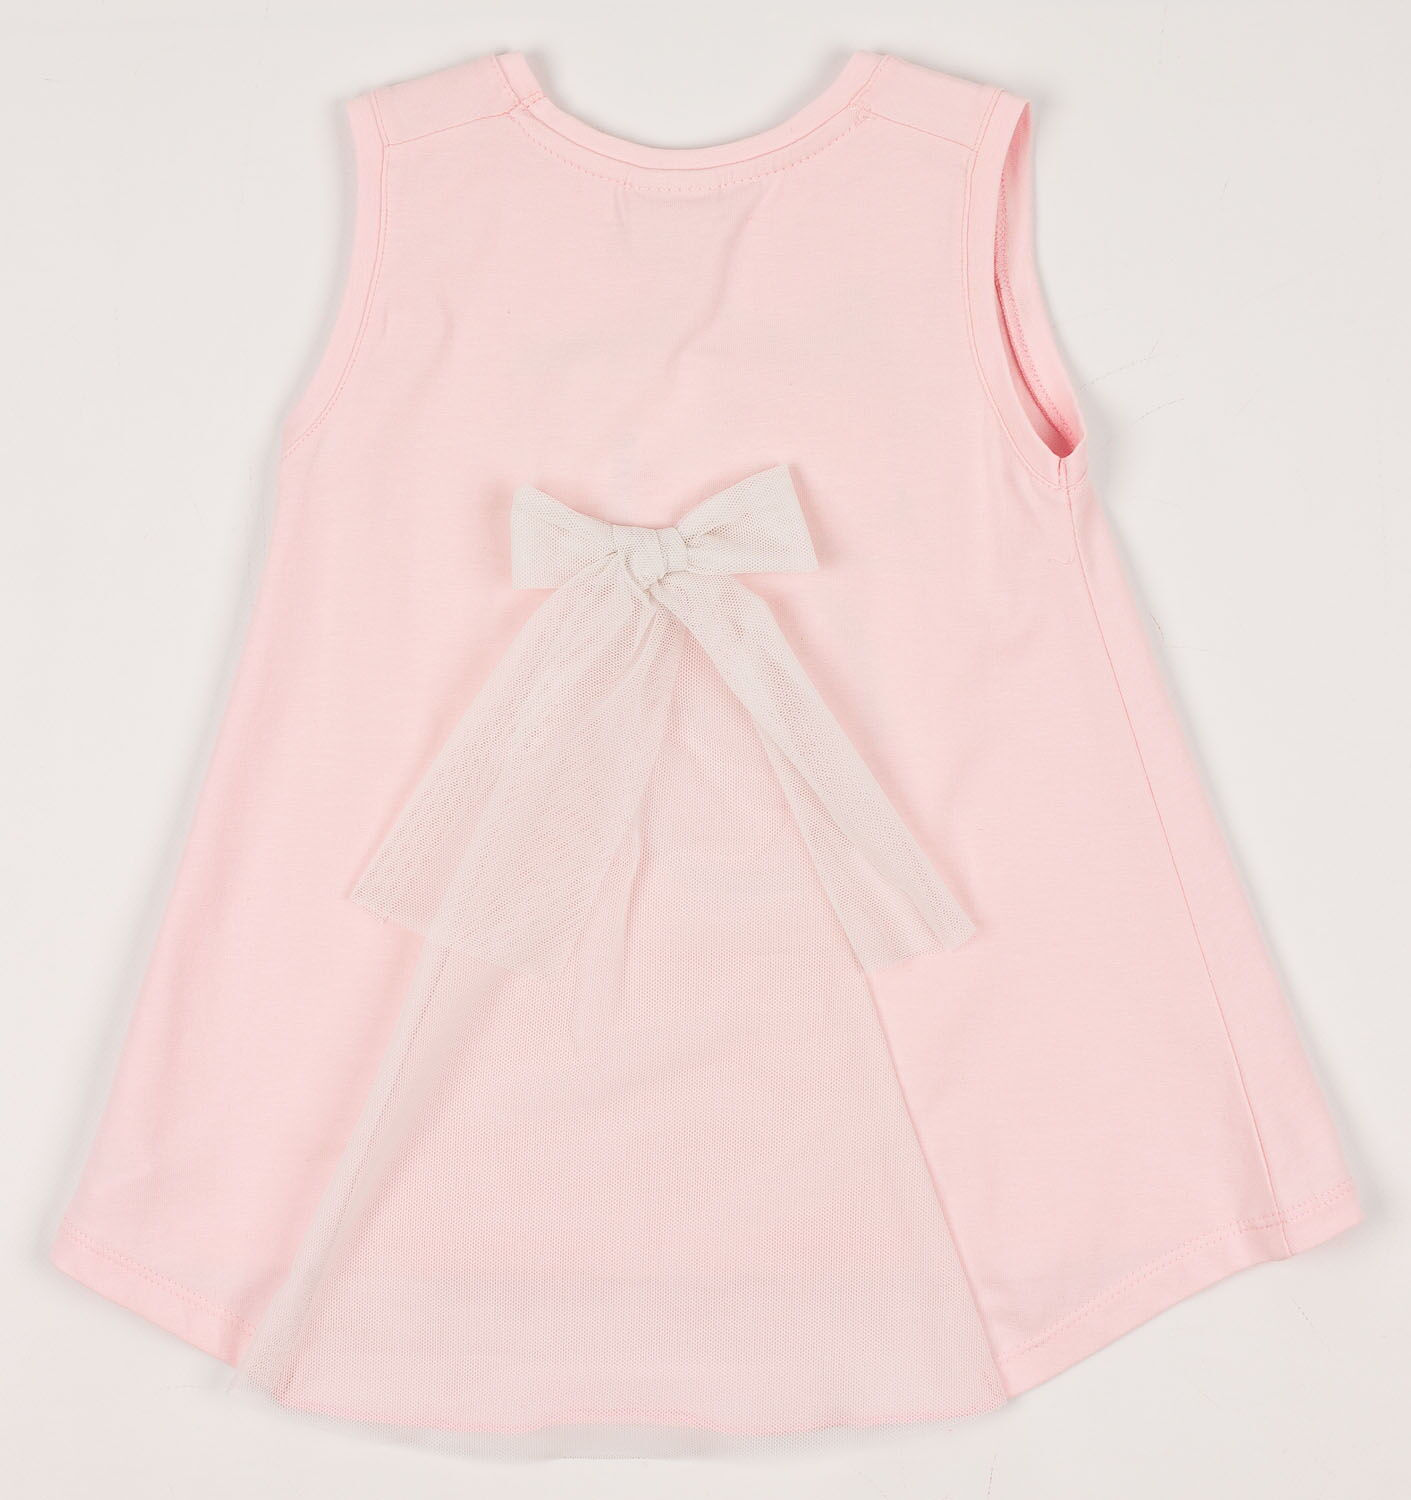 Комплект для девочки (майка+бриджи) Фламинго розовый 898-416 - картинка